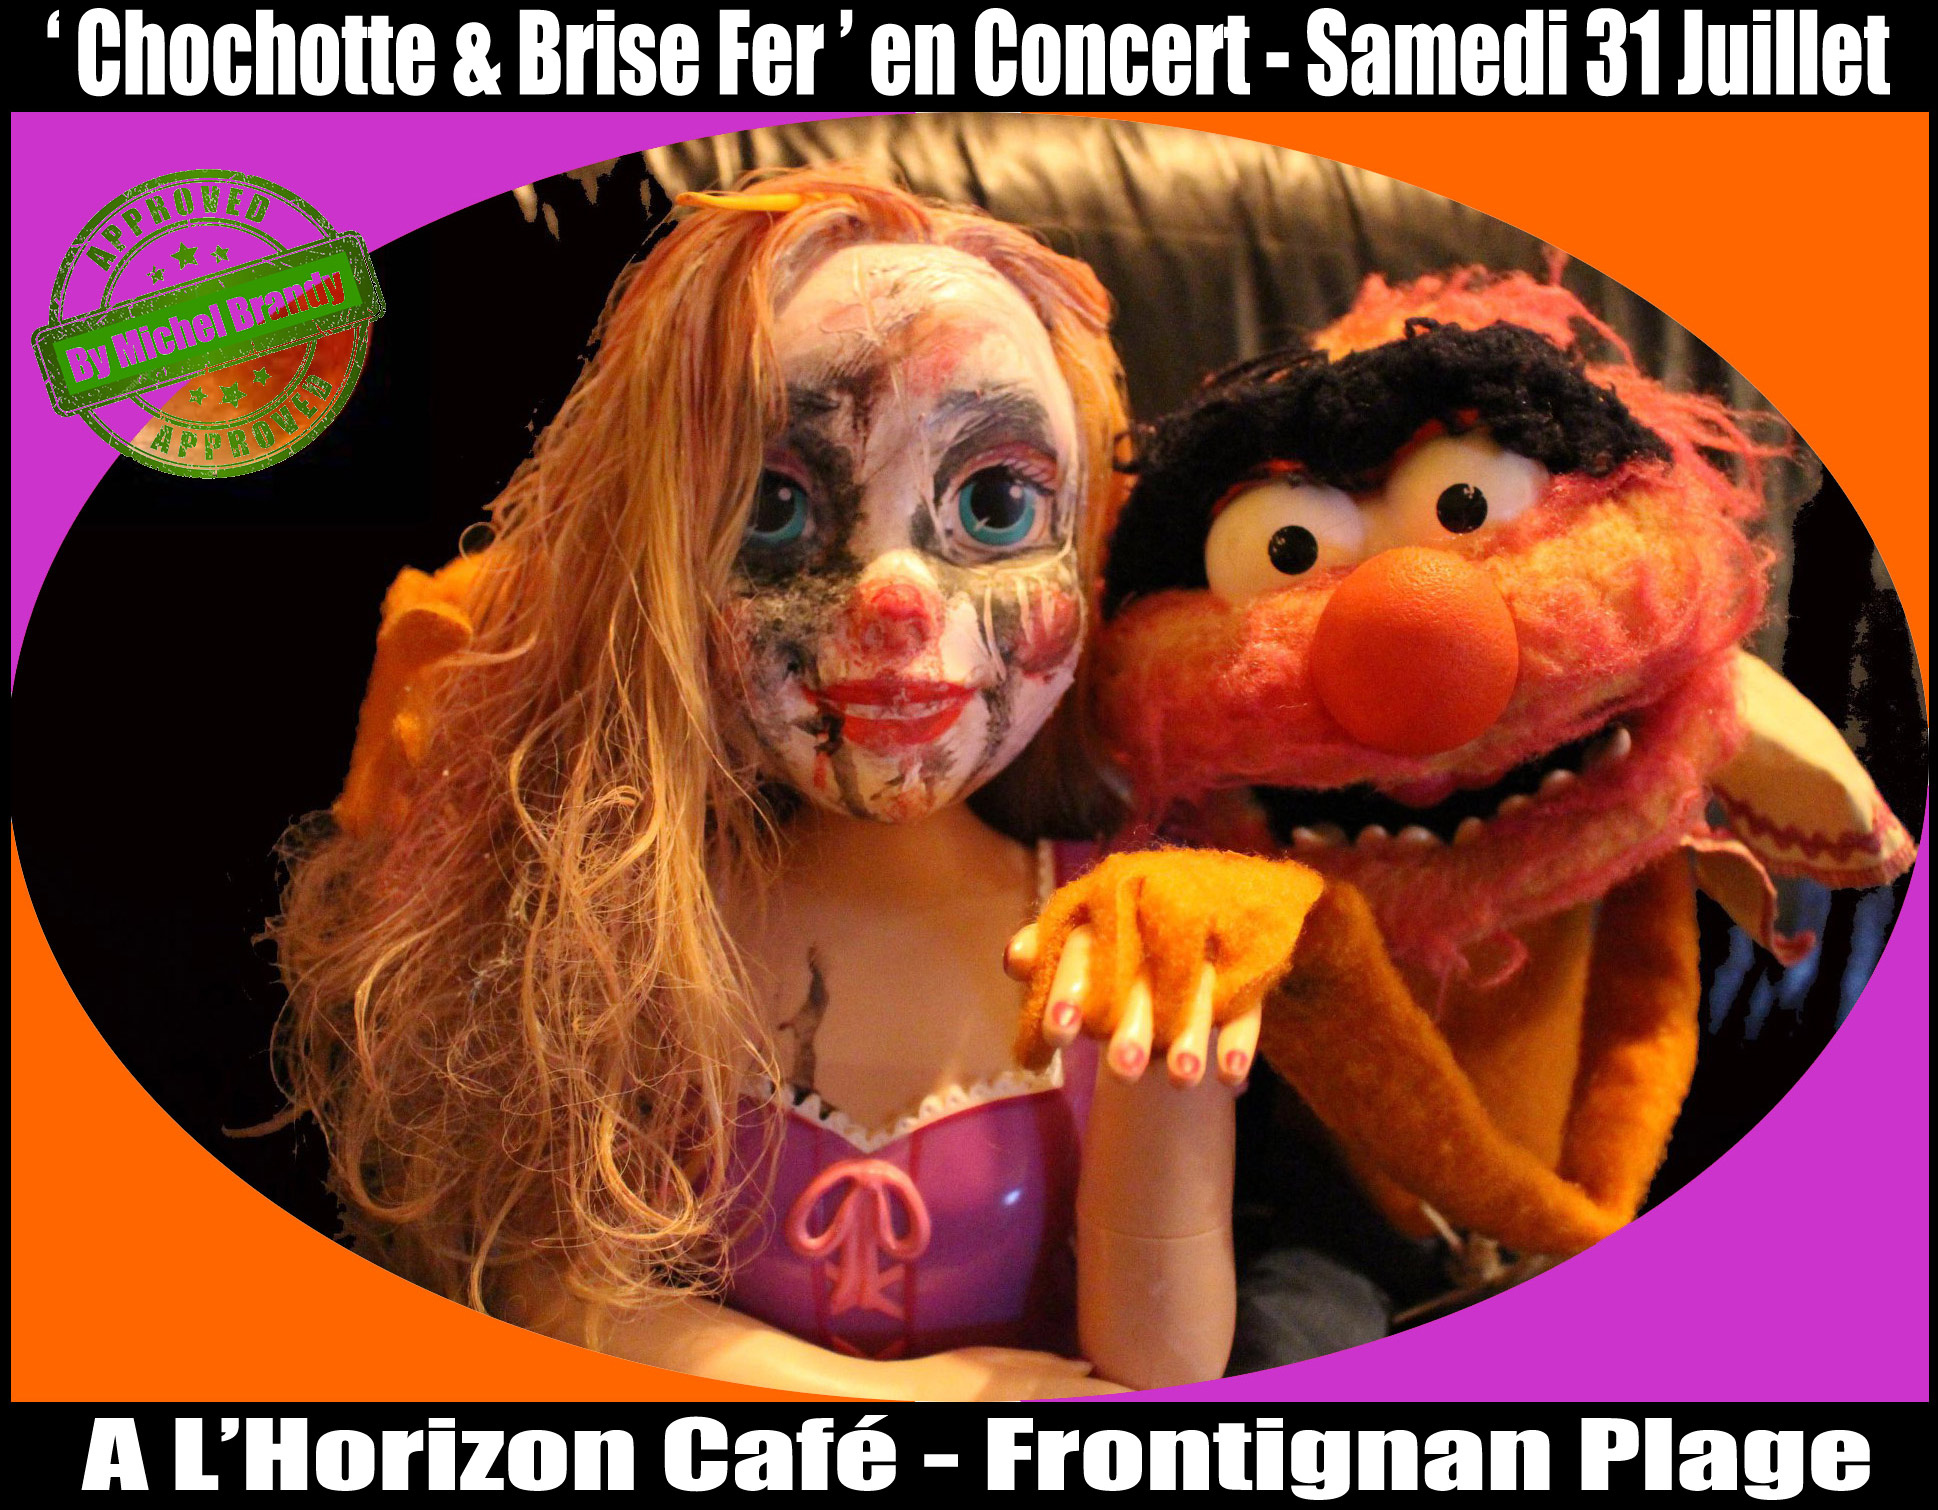 Chochotte & Brise Fer en concert